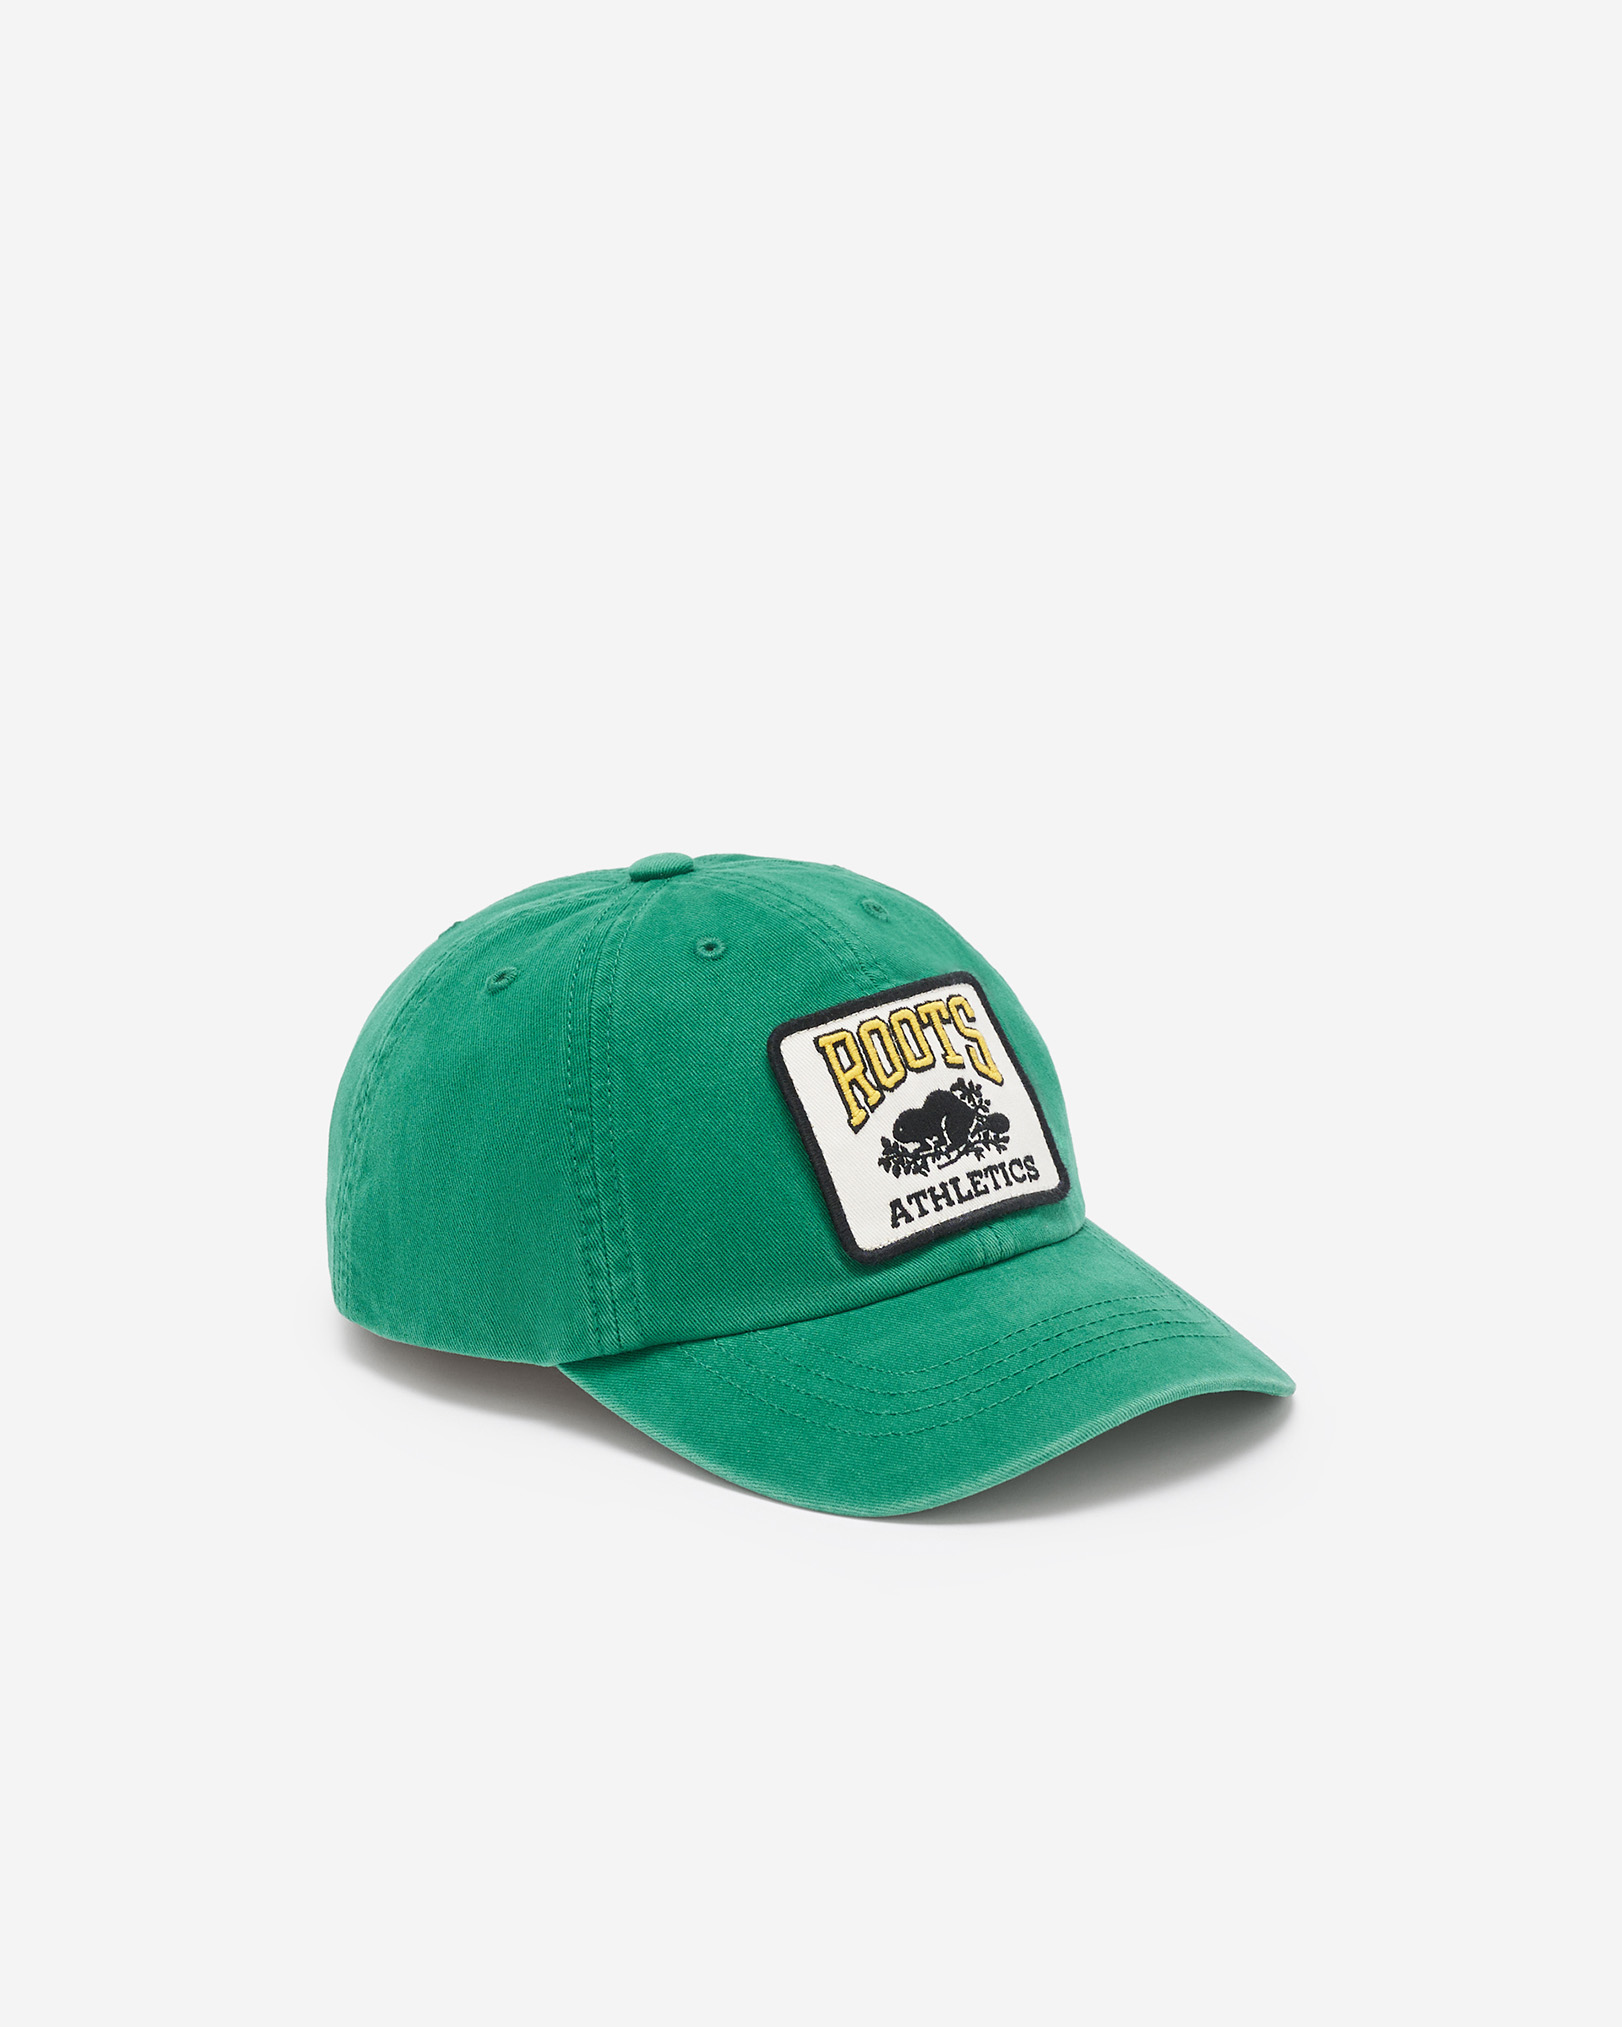 Roots RBA Baseball Cap Hat in Green Jacket